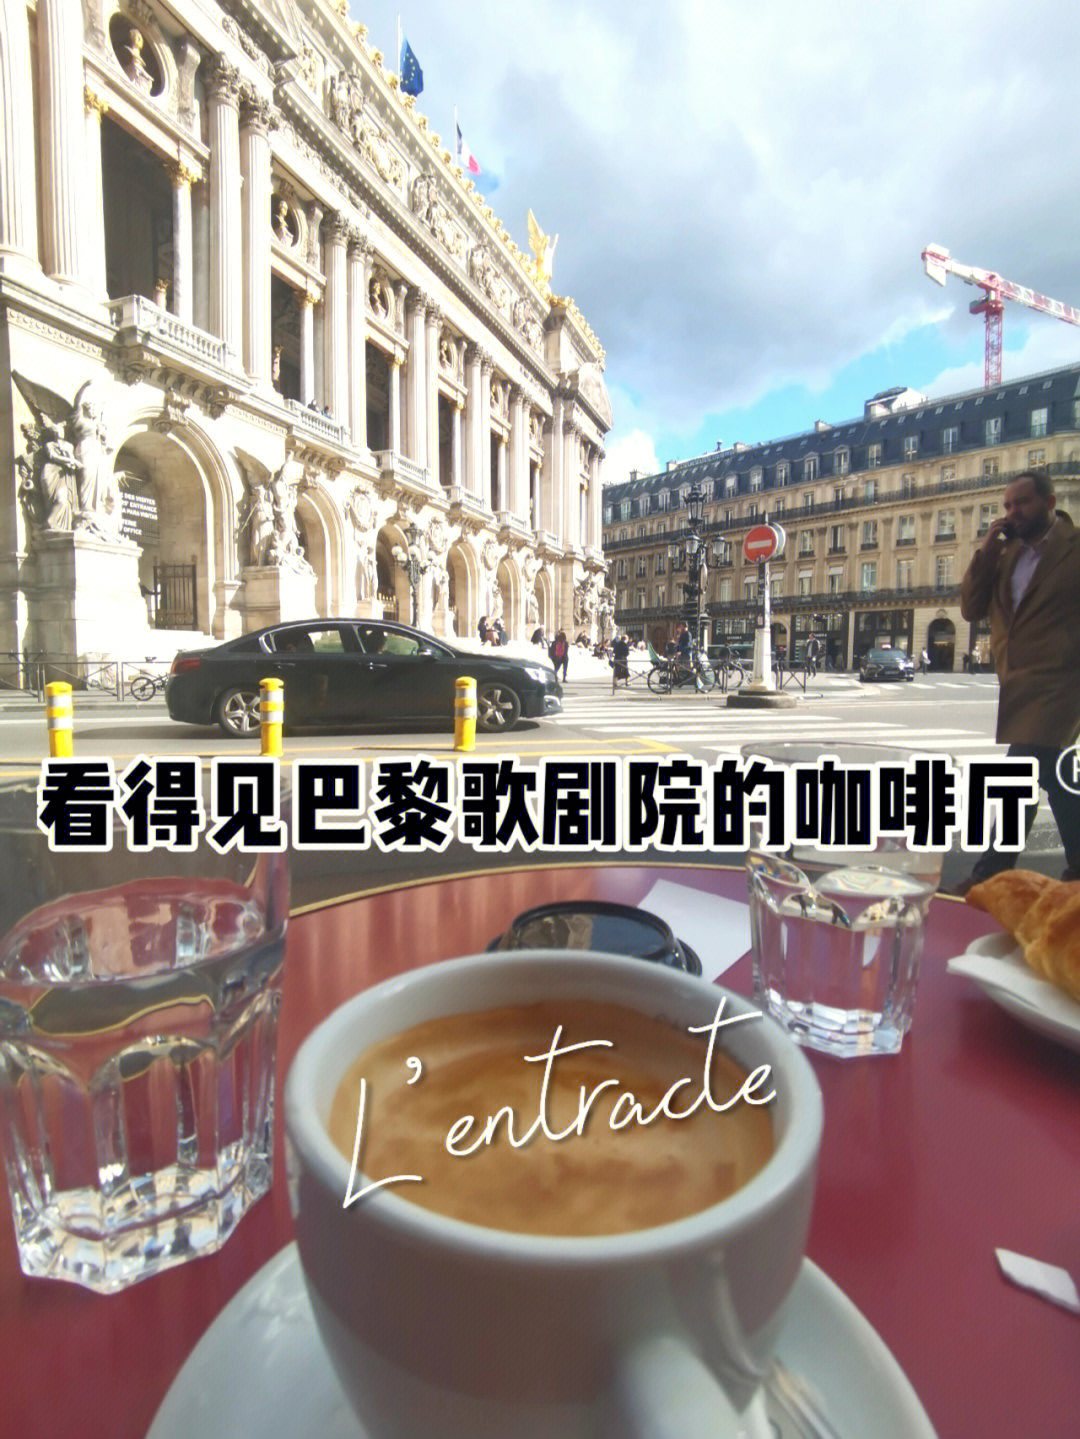 lentracte75巴黎不可不去的街头咖啡店